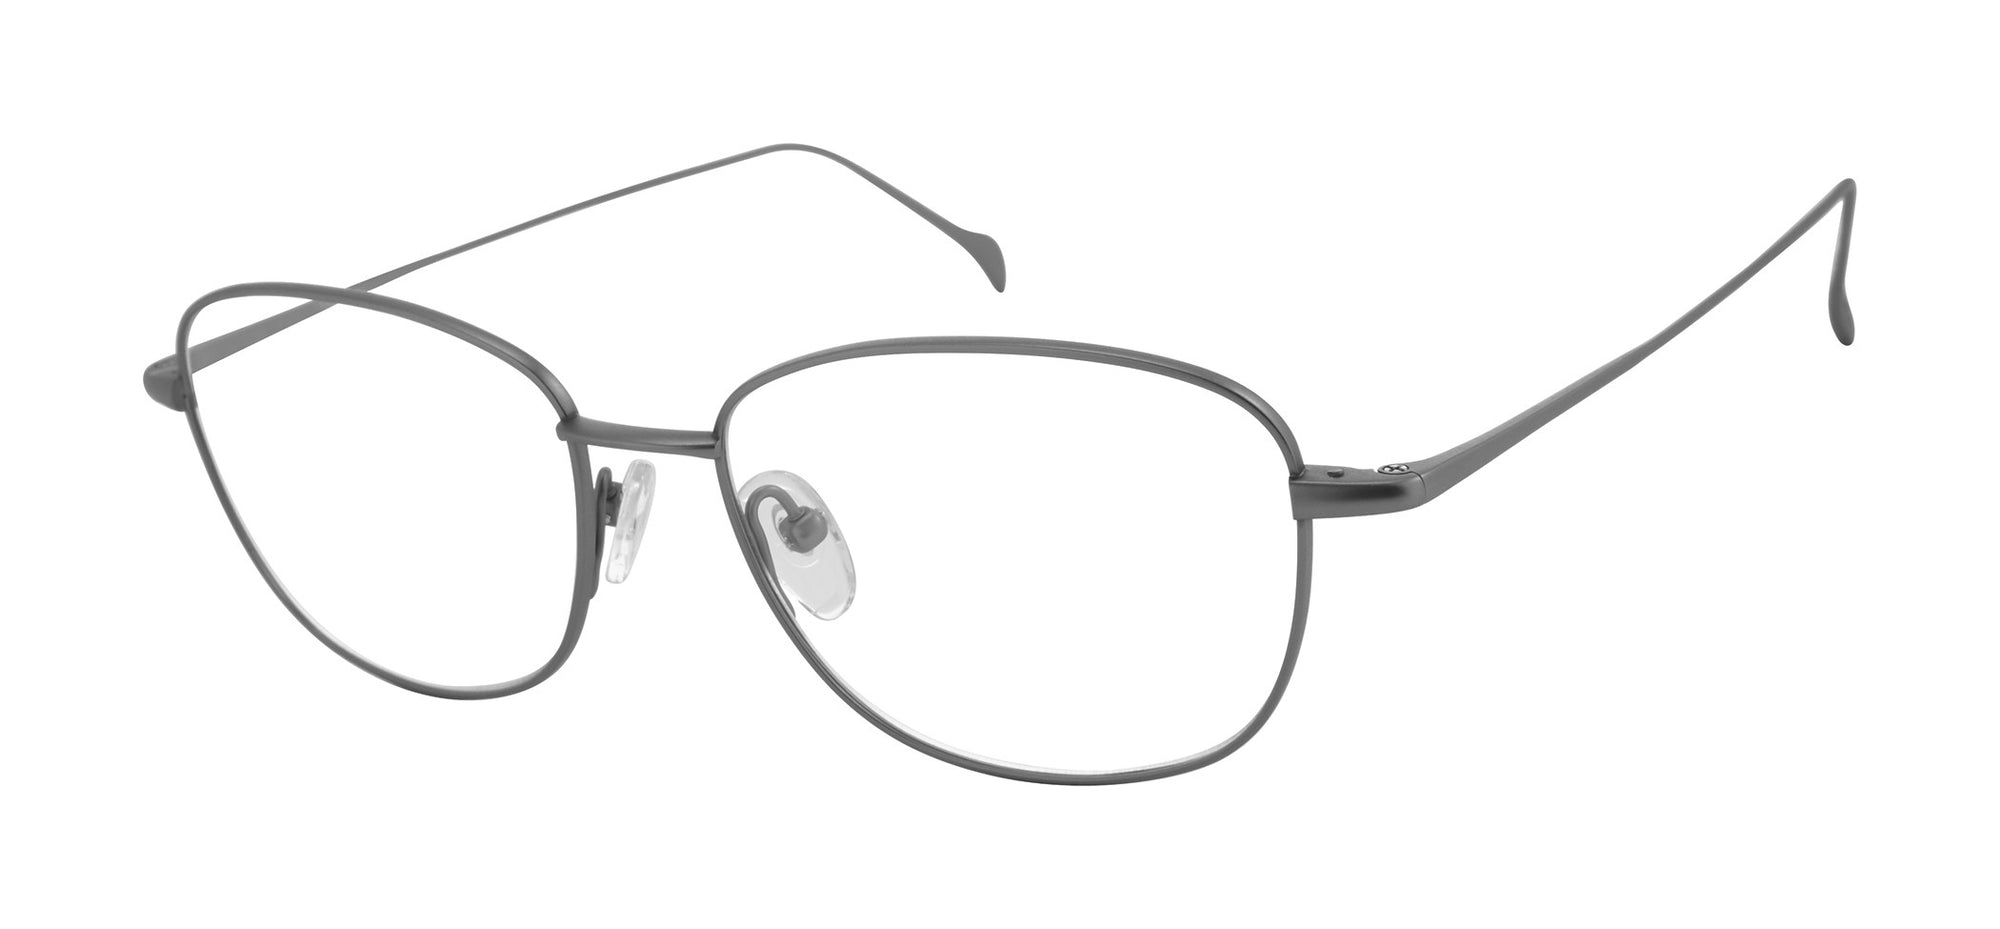 Stepper Eyewear Eyeglasses 50186 - Go-Readers.com